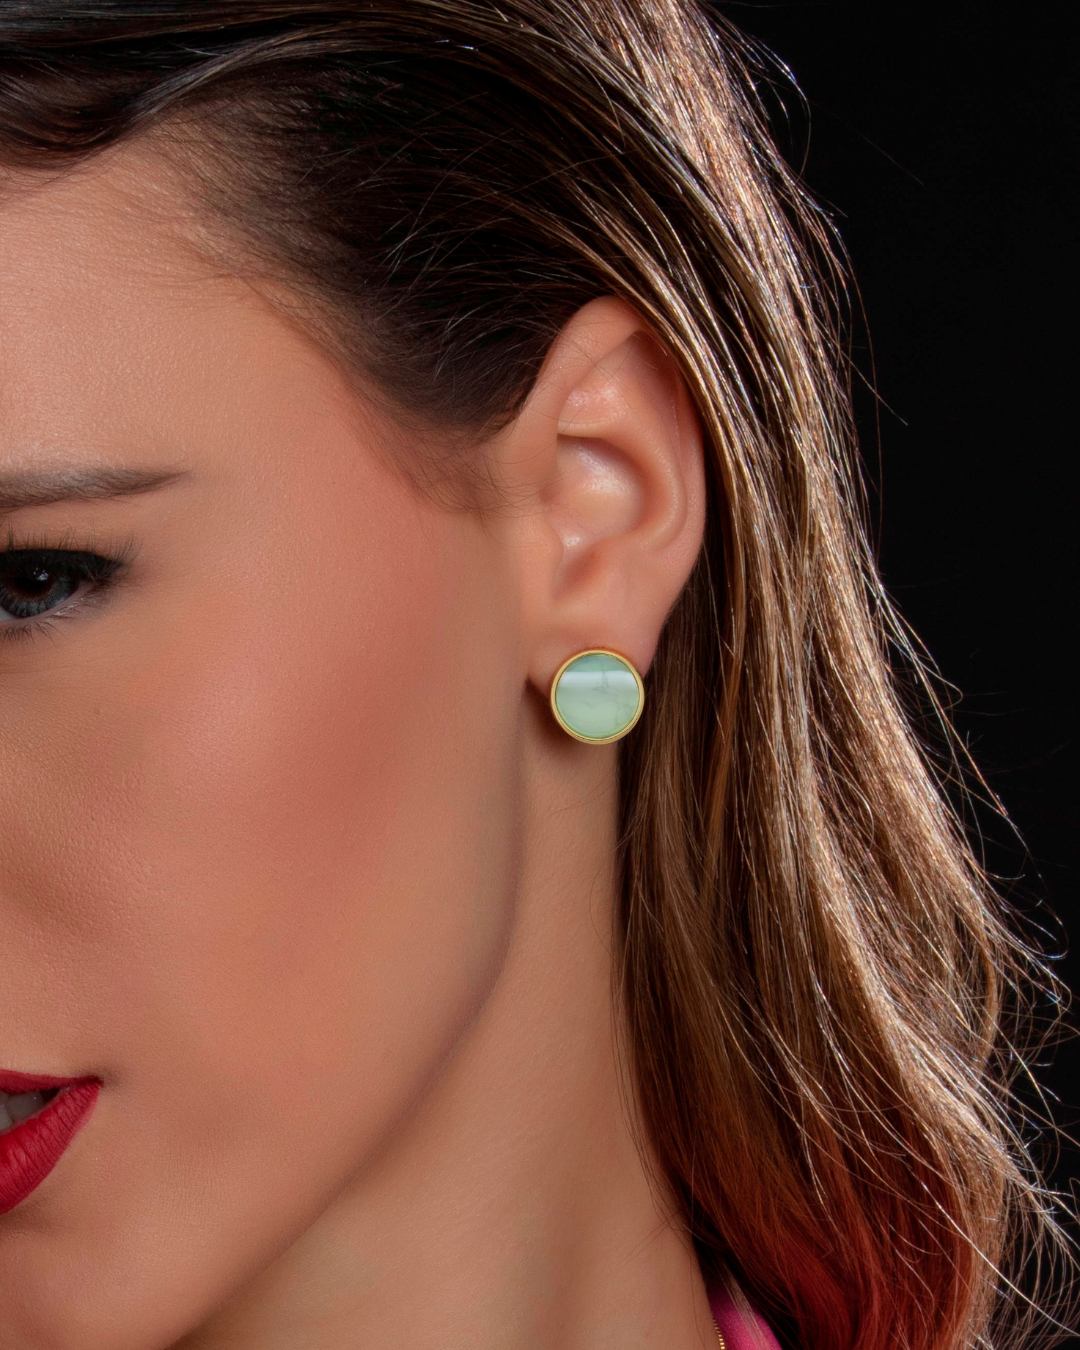 Colore delicate earrings